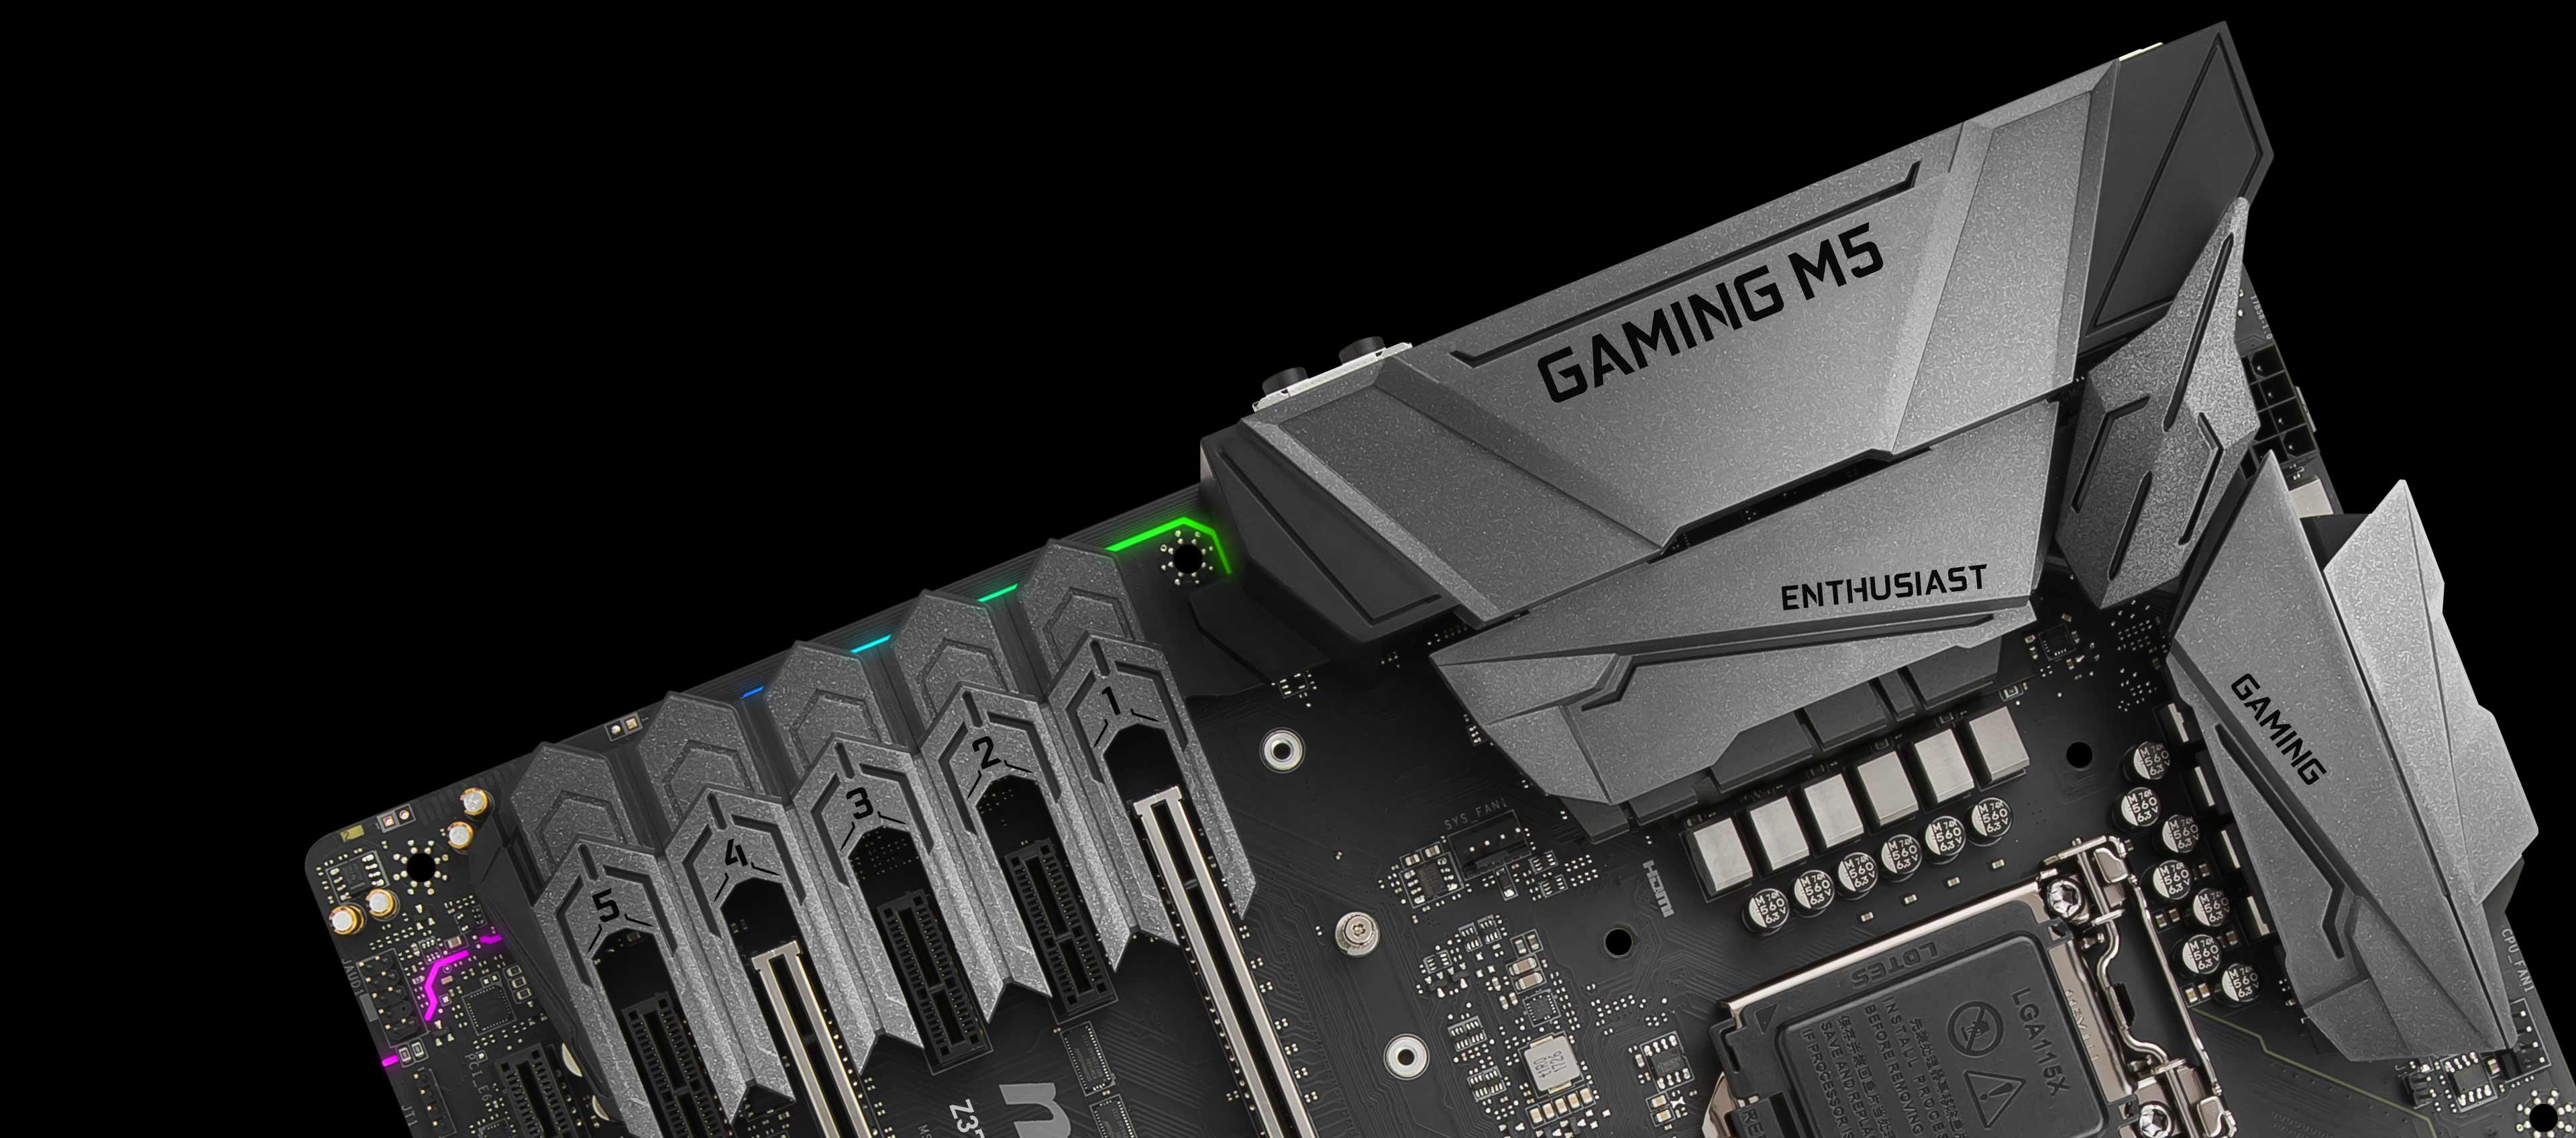 MSI Z370 GAMING M5 Enthusiast Intel Coffee Lake LGA 1151 Gaming Motherboard